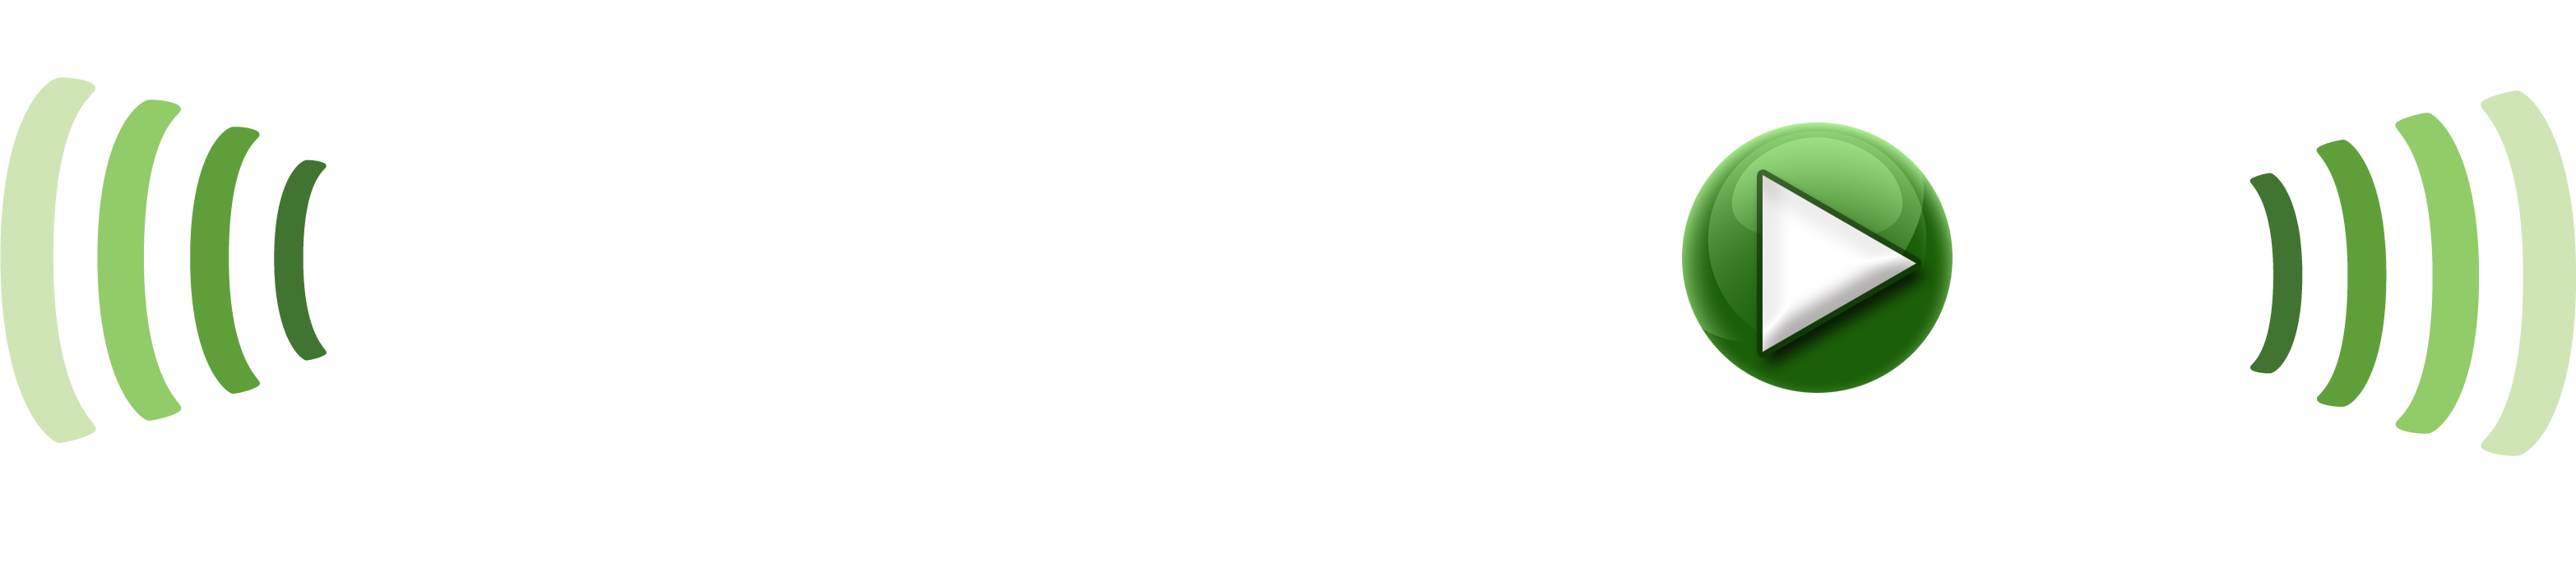 Toadhop network logo